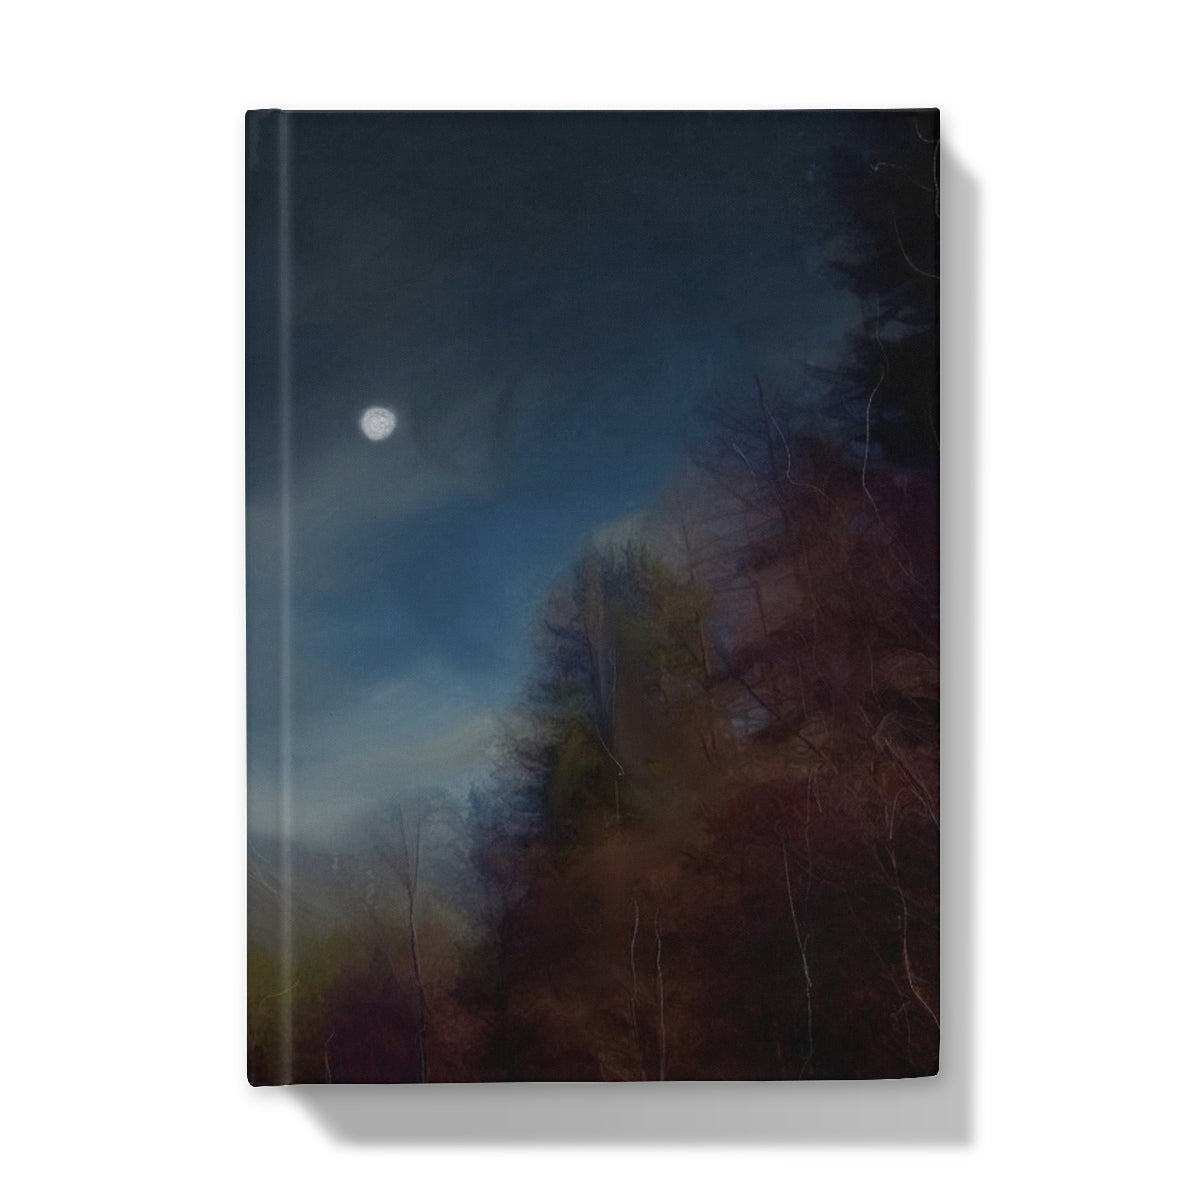 Glencoe Lochan Moonlight Art Gifts Hardback Journal-Journals & Notebooks-Scottish Lochs & Mountains Art Gallery-5"x7"-Lined-Paintings, Prints, Homeware, Art Gifts From Scotland By Scottish Artist Kevin Hunter